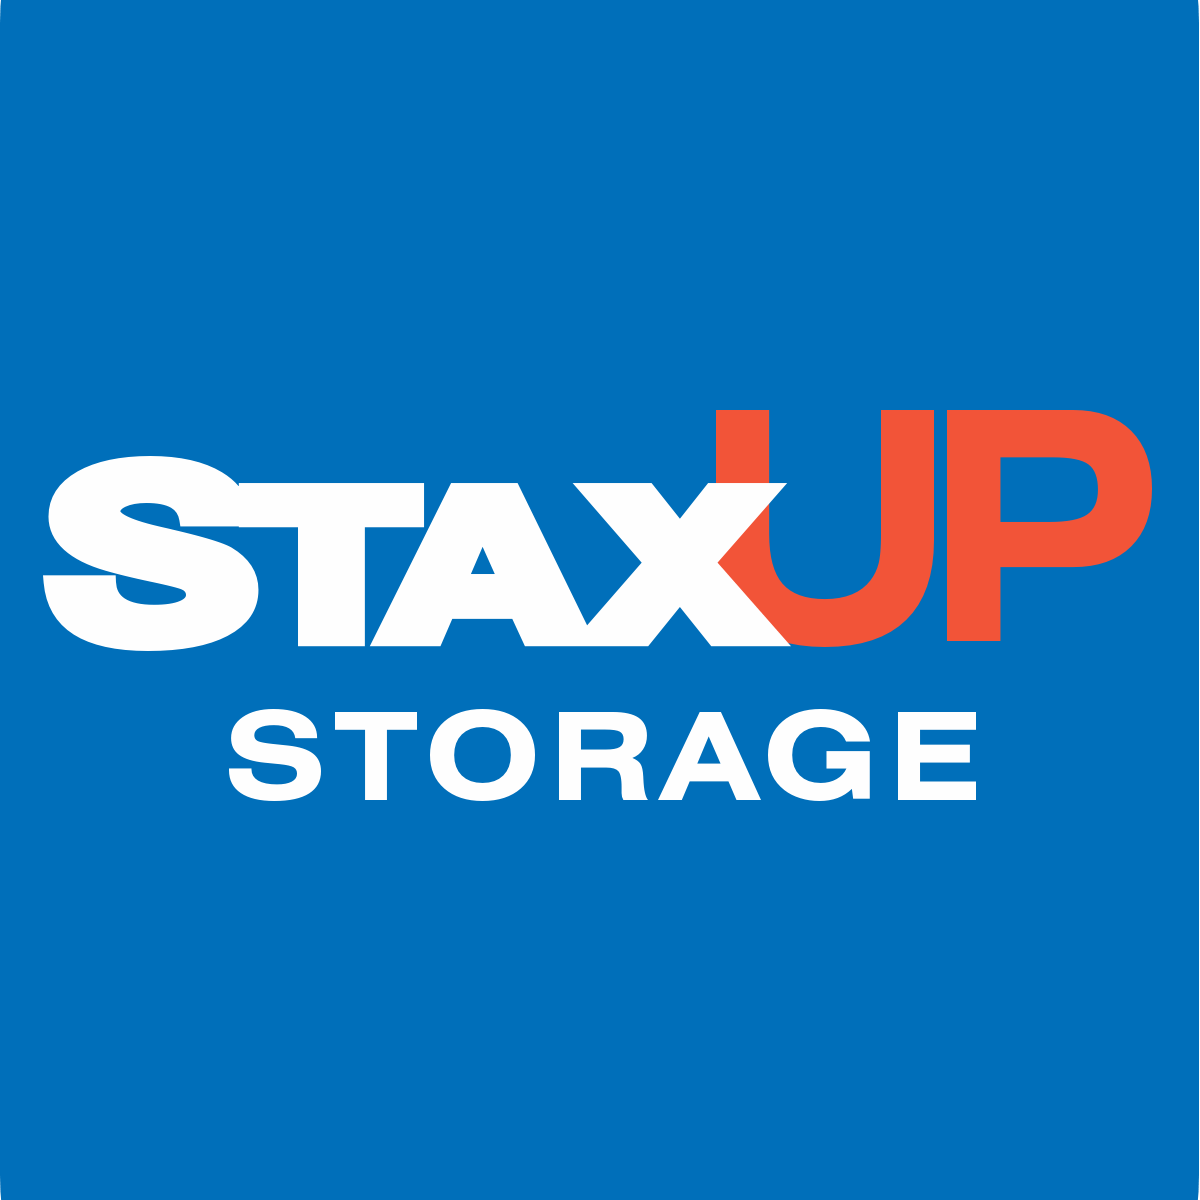 StaxUP Storage